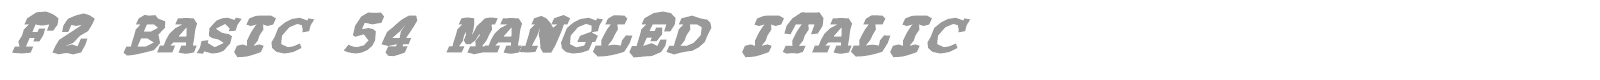 FZ BASIC 54 MANGLED ITALIC font preview